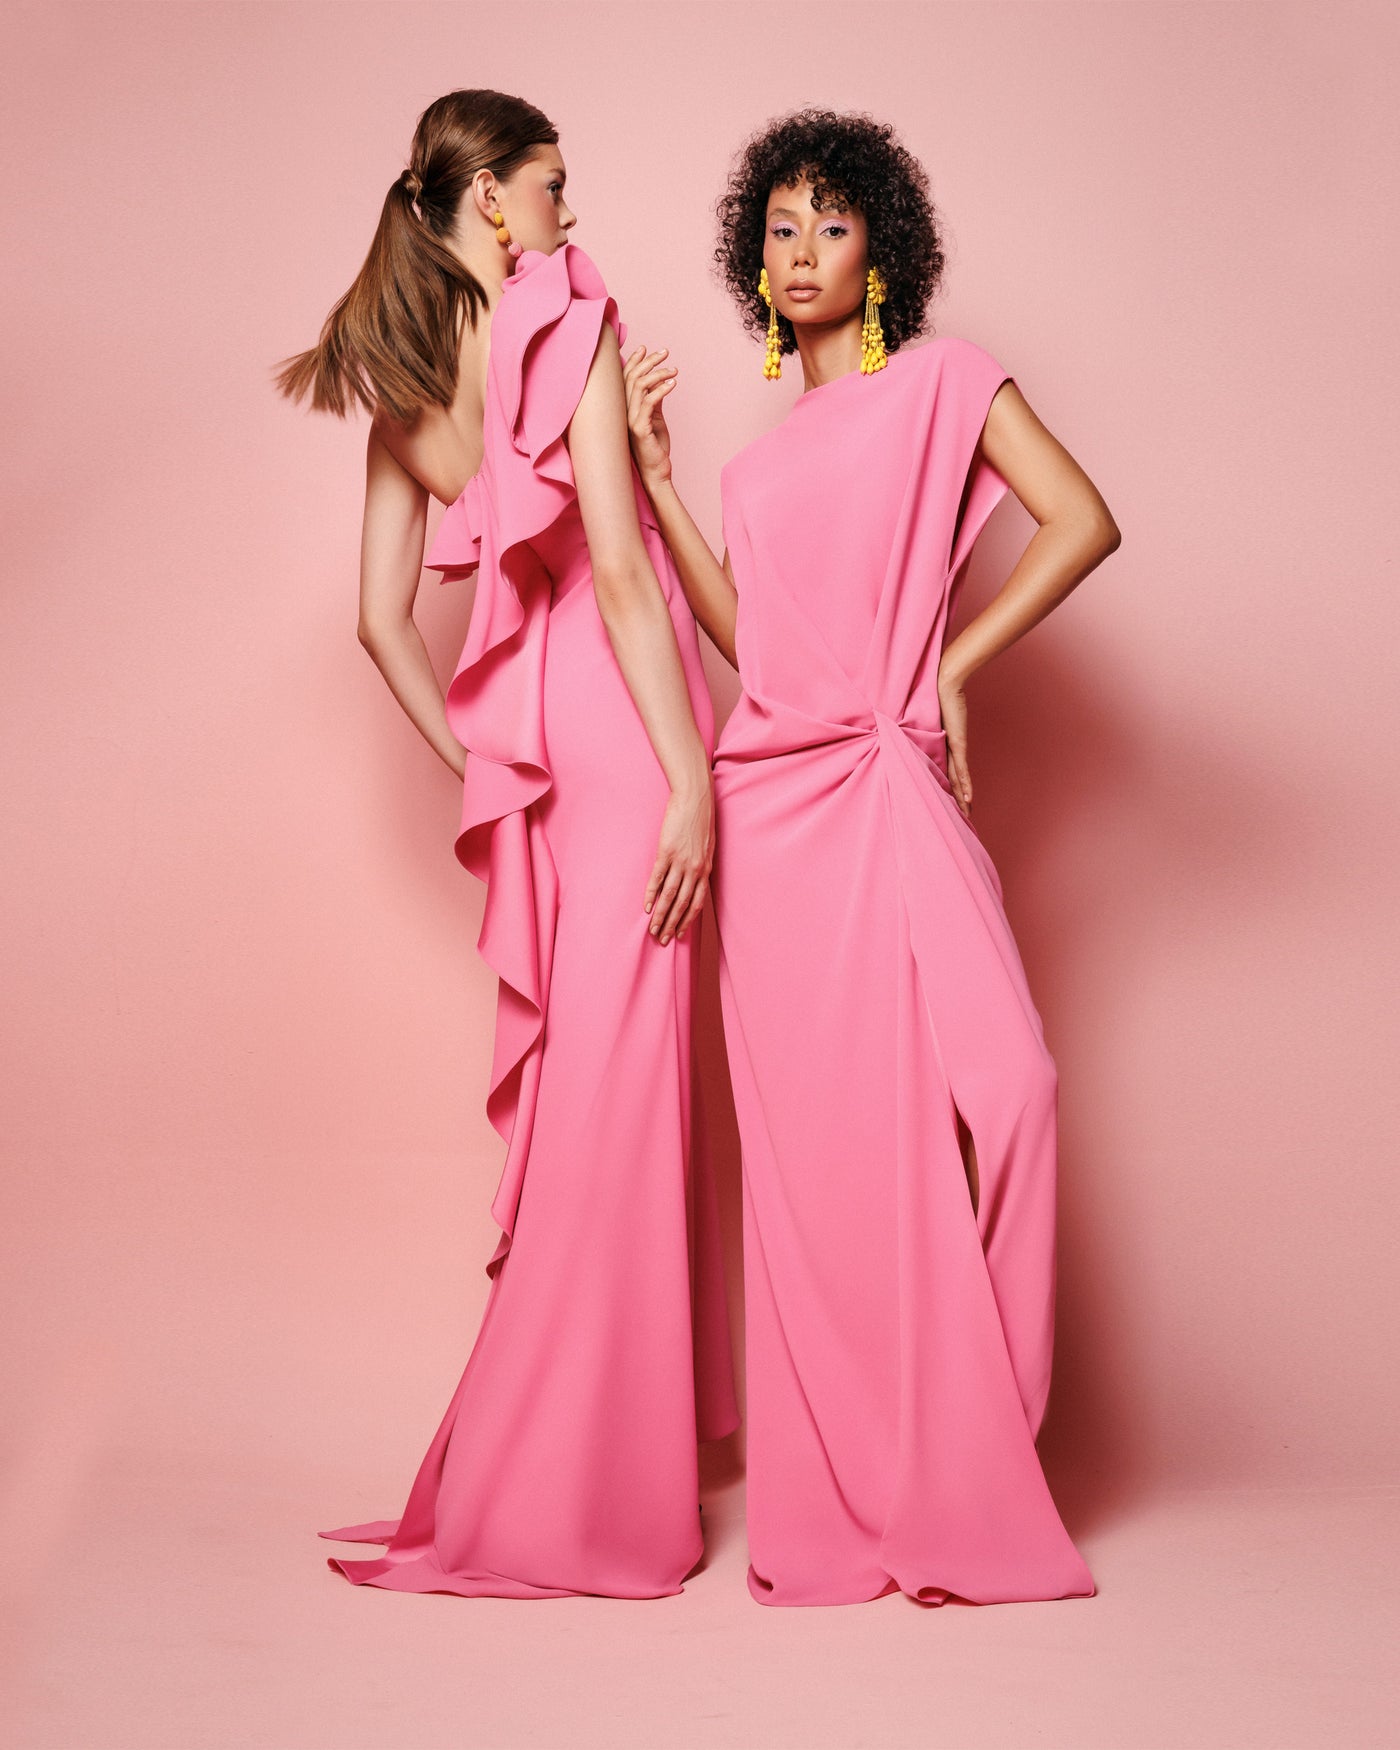 One-Shoulder Ruffled Neckline Candy Pink Dress